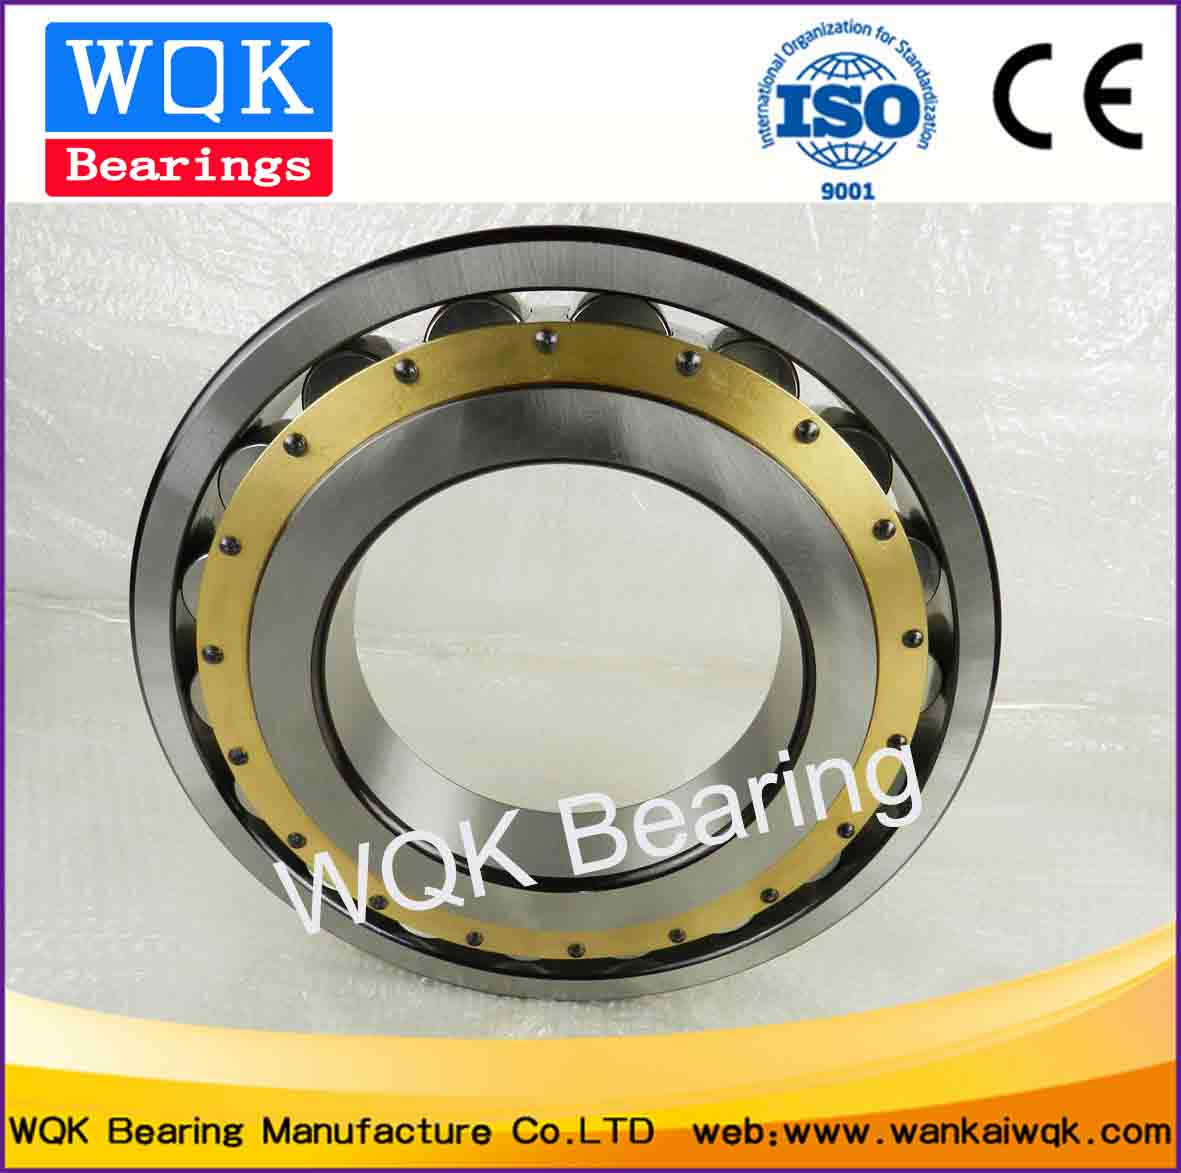 20240 MB single row spherical roller bearing WQK bearing ex-stocks